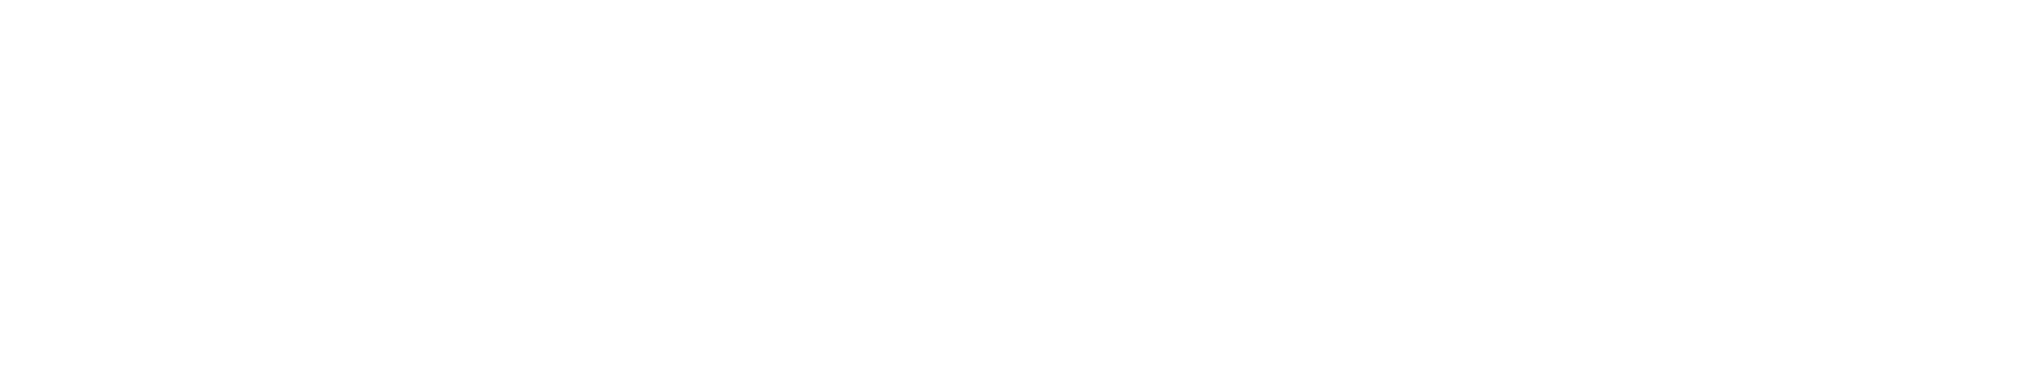 Churchill-2020-logo-white-for-event-invite image